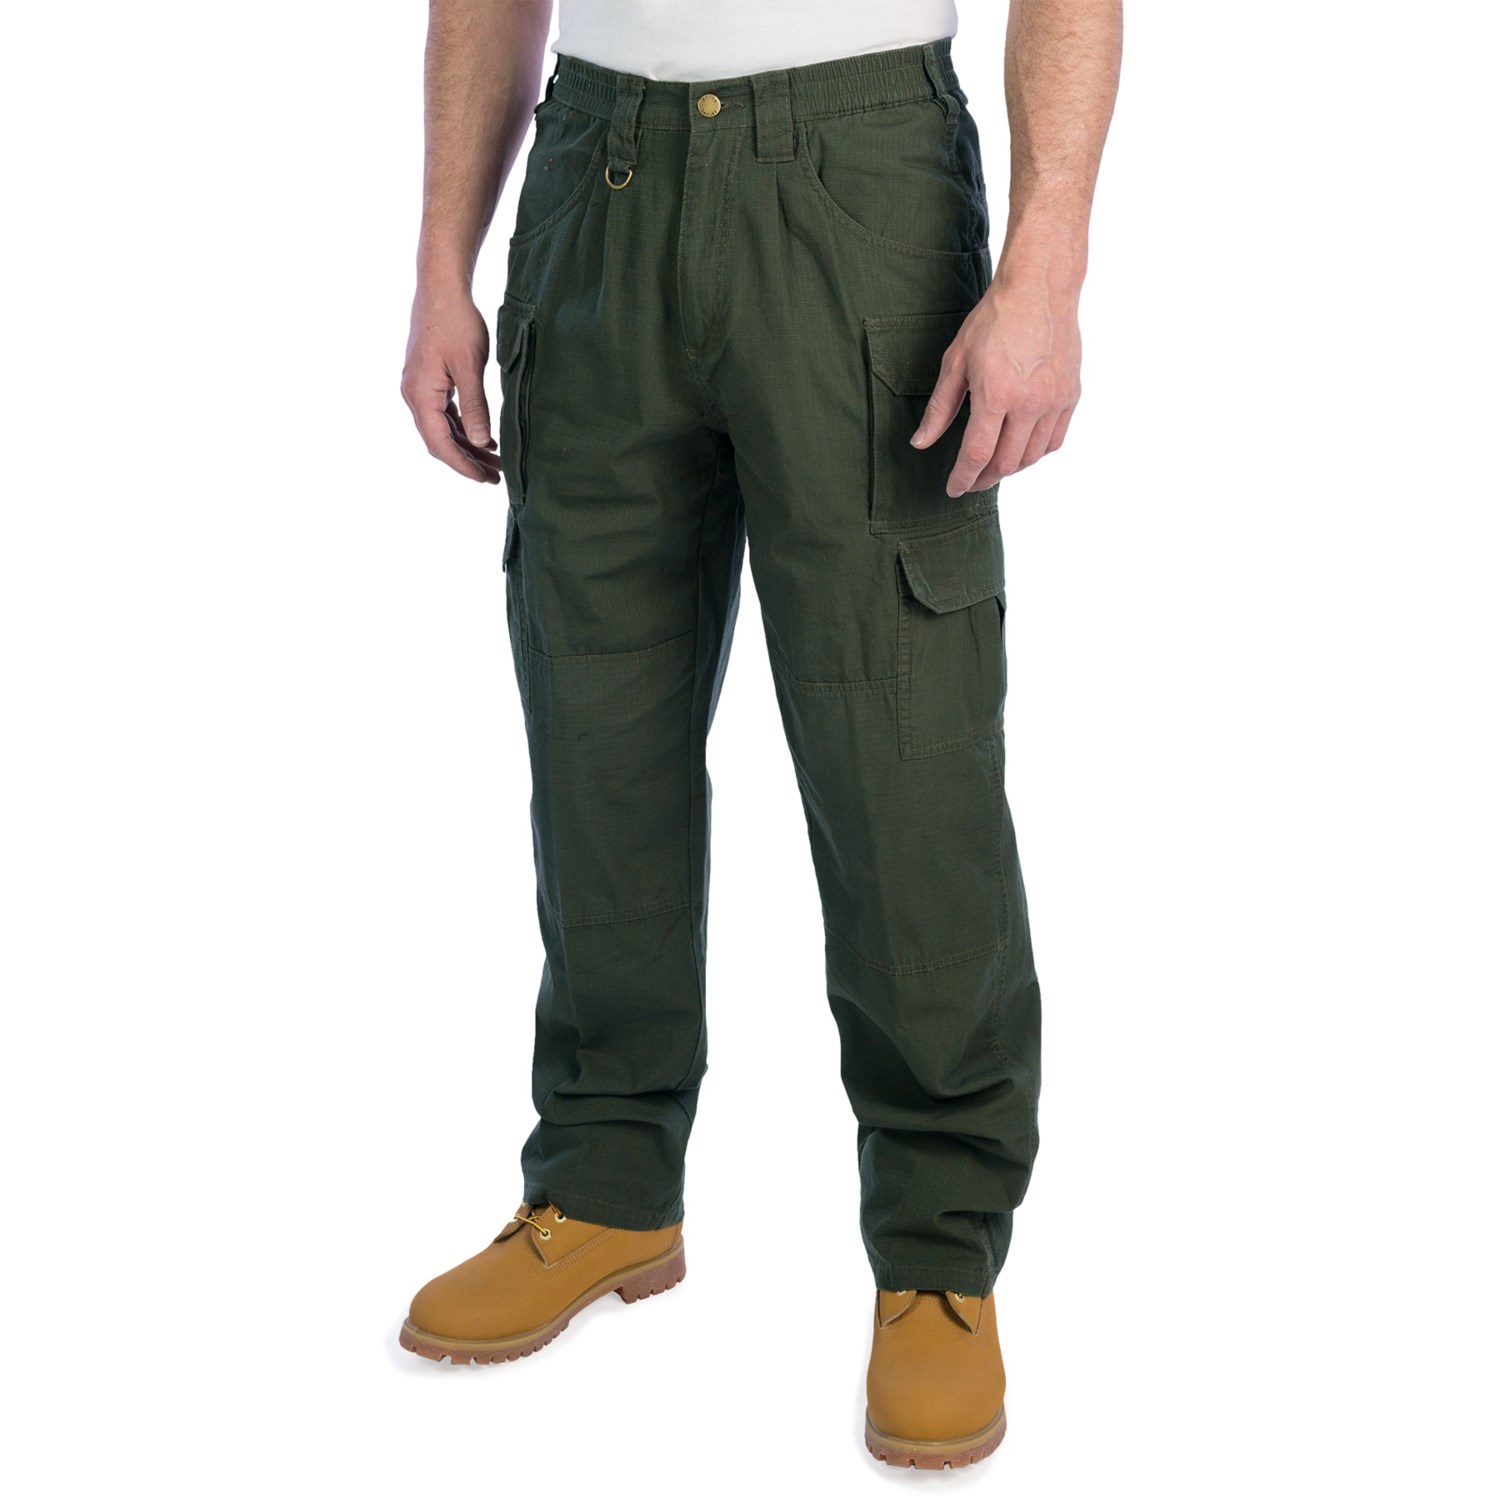 Tactical Pants For Men 22